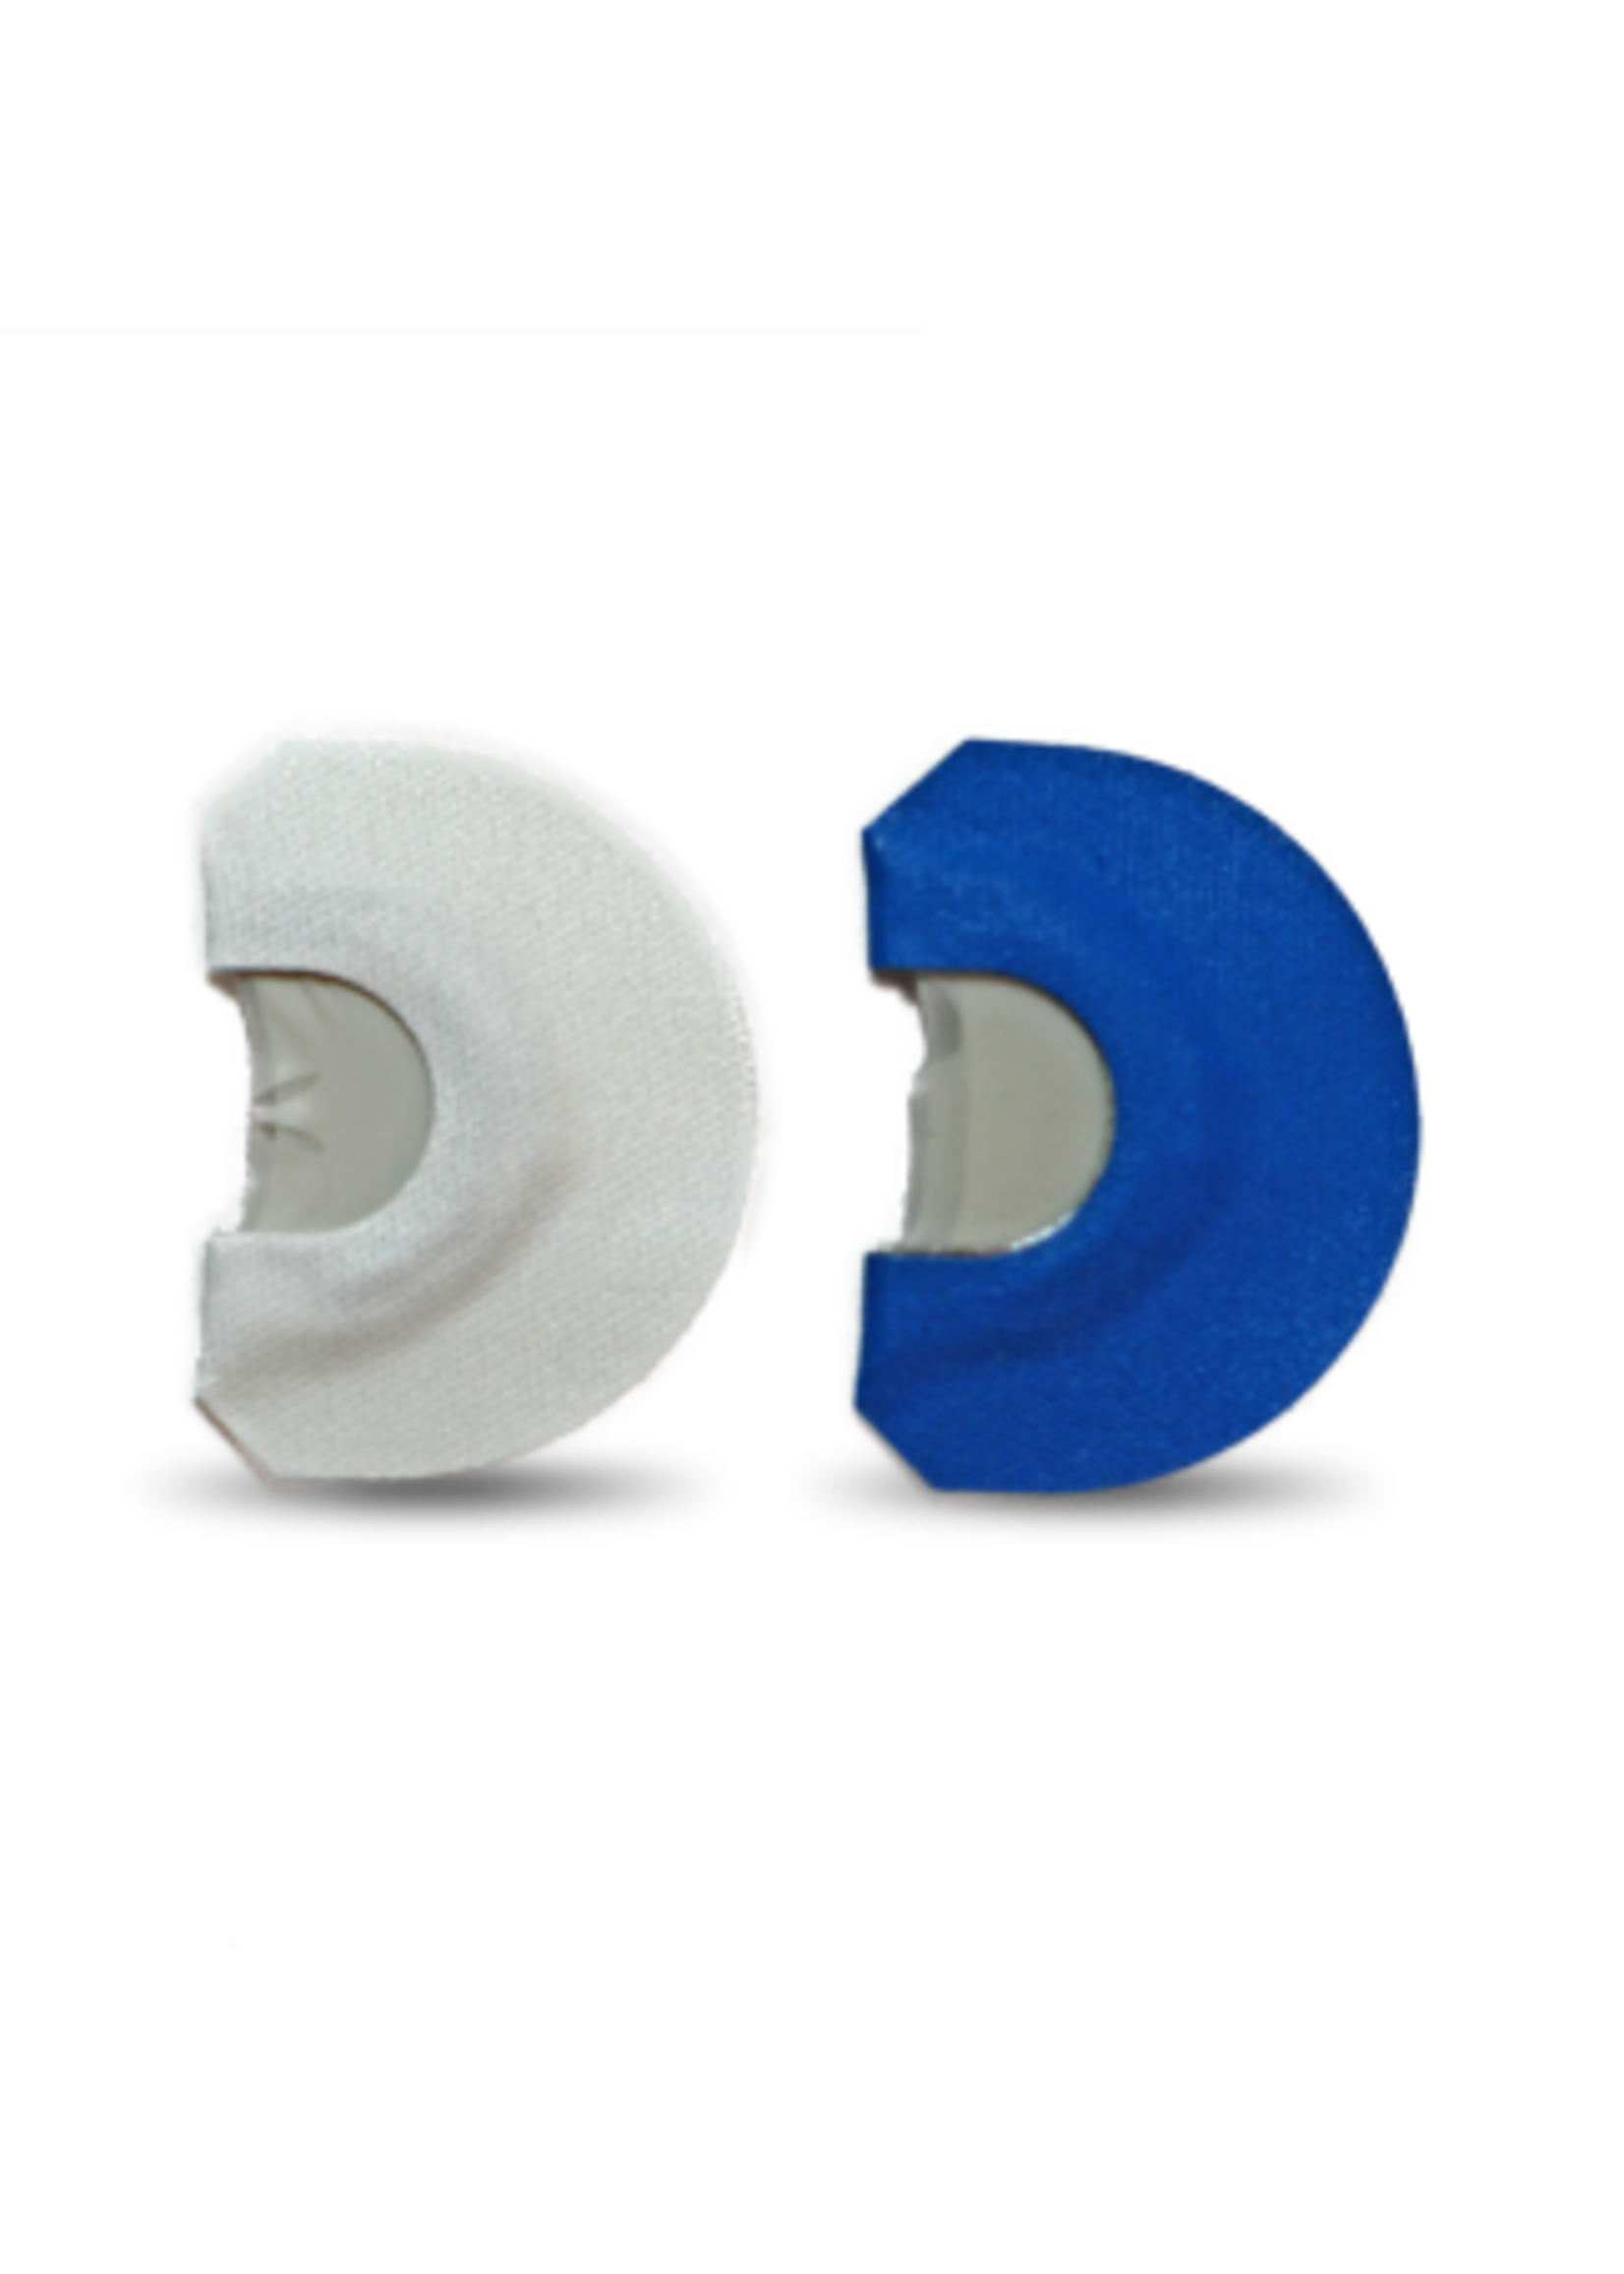 Recall Designs diaphragme bleu et blanc avec boite